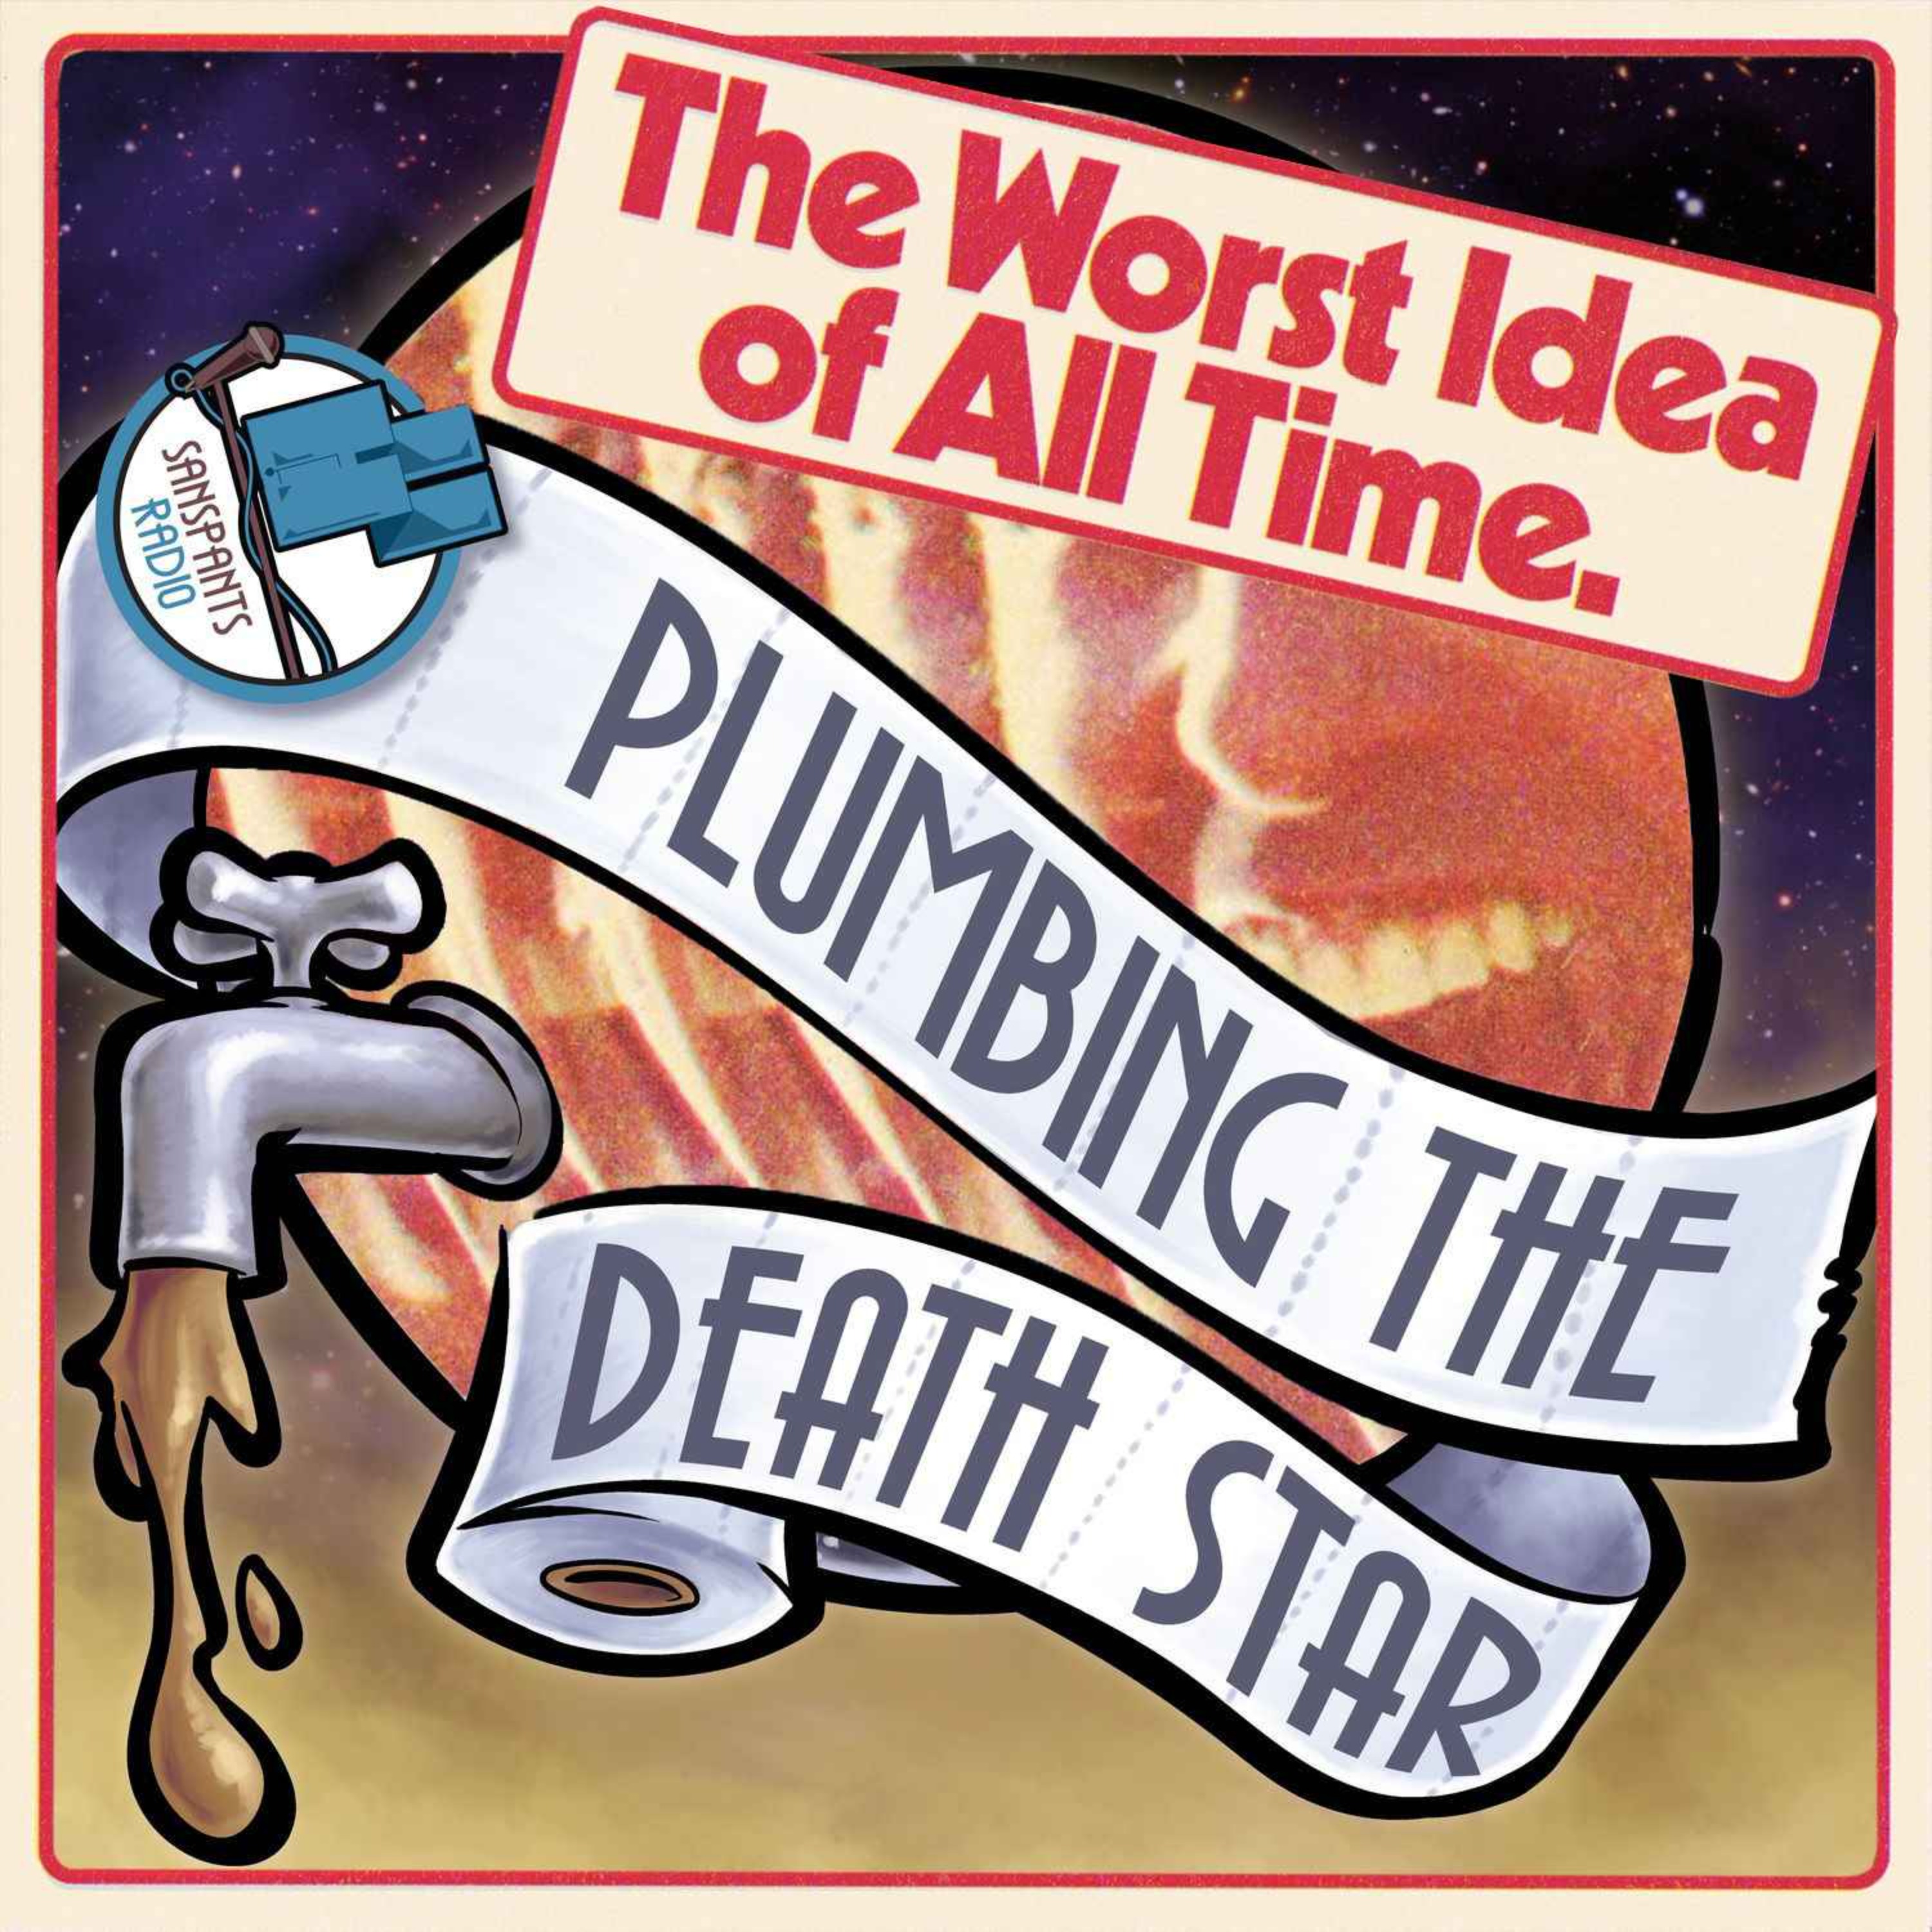 Plumbing The Death Star